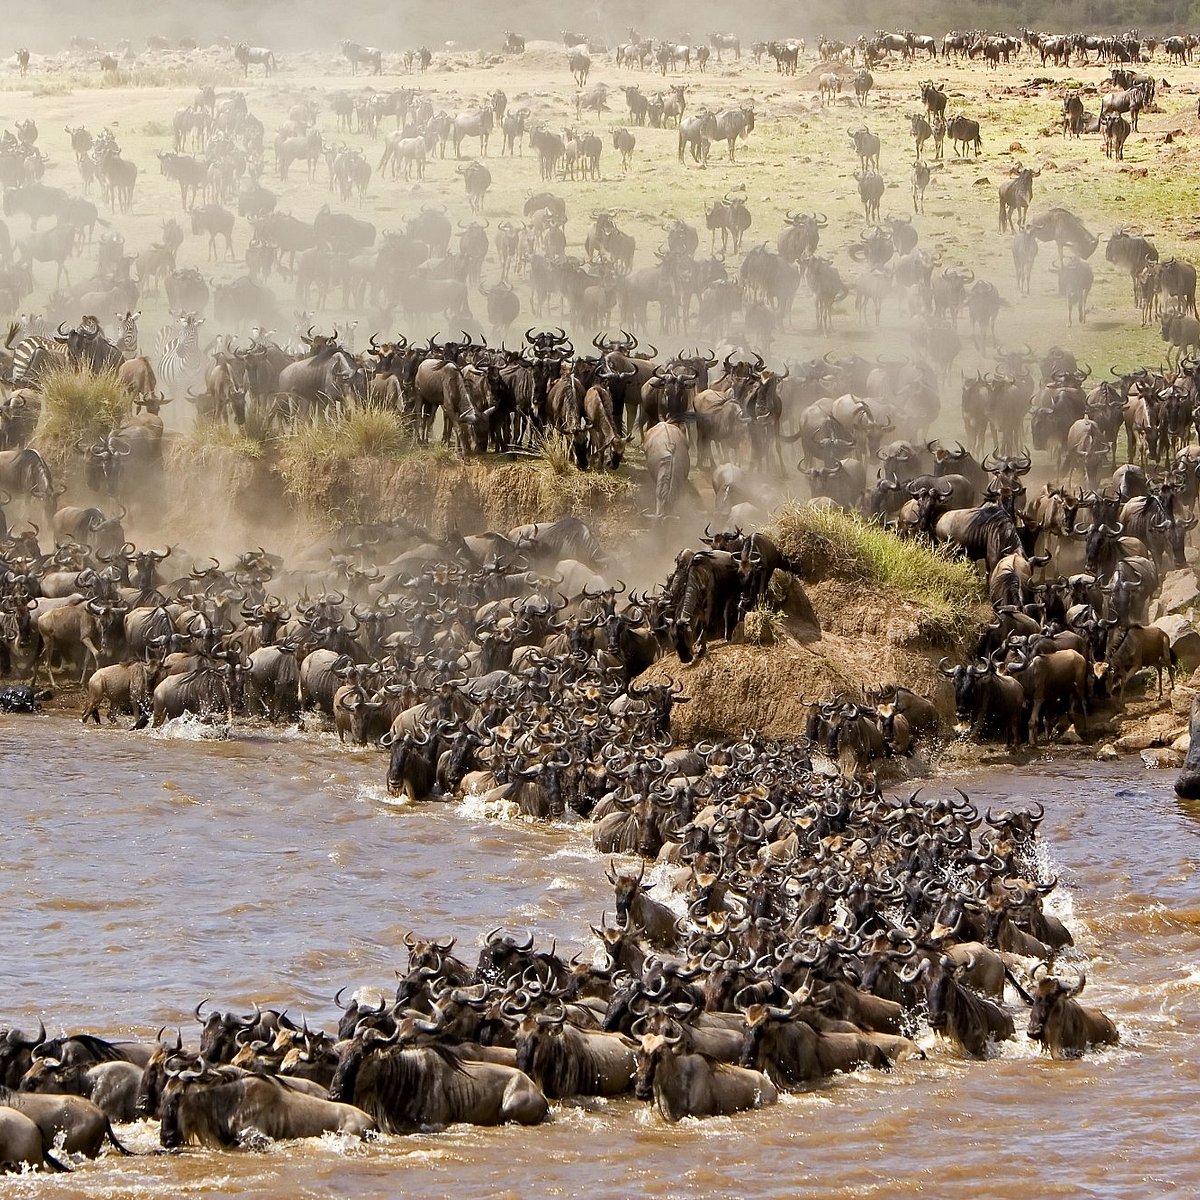 MARA RIVER (Maasai Mara National Reserve) - All You Need to Know BEFORE You  Go